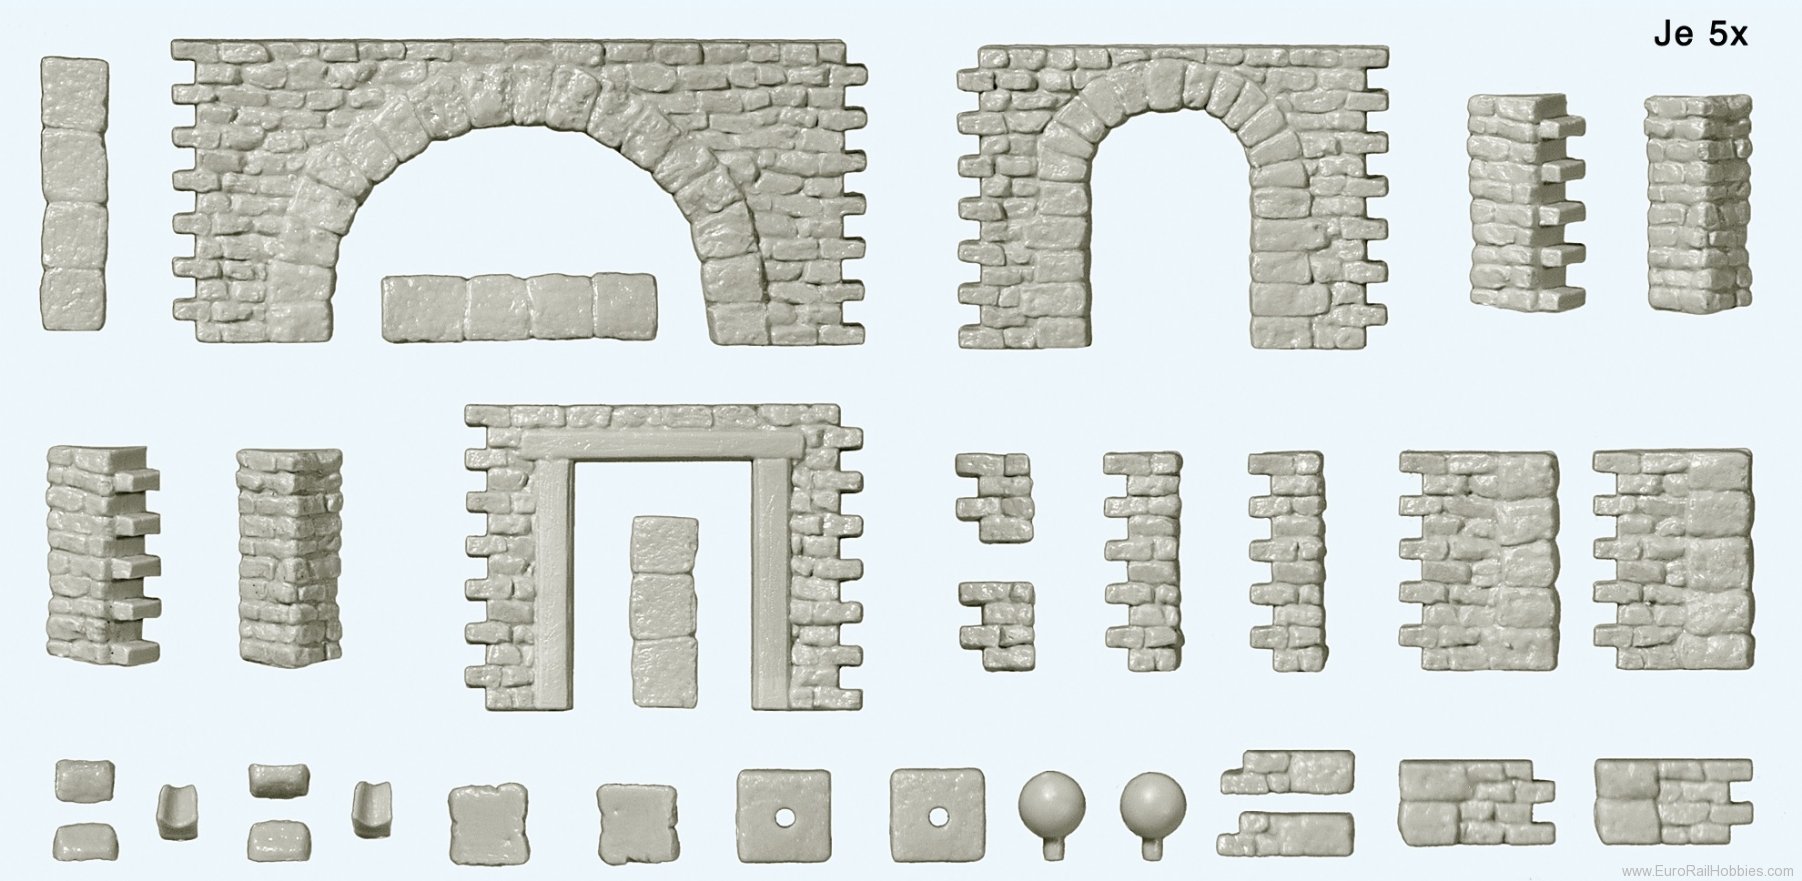 Preiser 18217 Quarrystone walls with doorways and doorway a